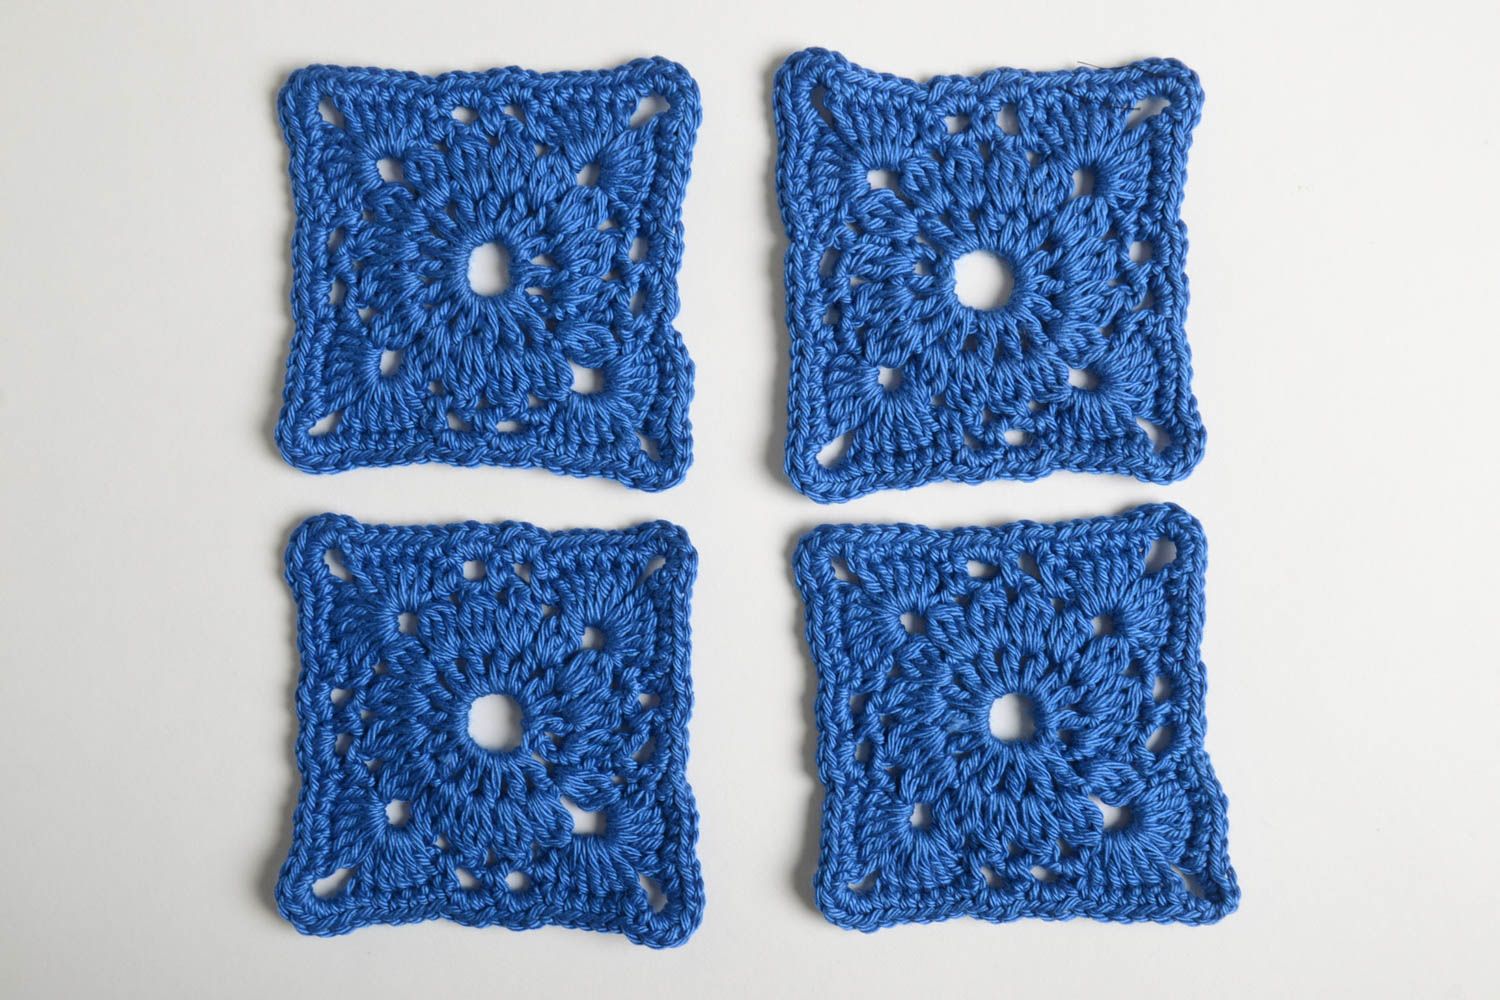 Cute handmade hot pads 4 pieces crochet coaster home textiles kitchen supplies photo 2